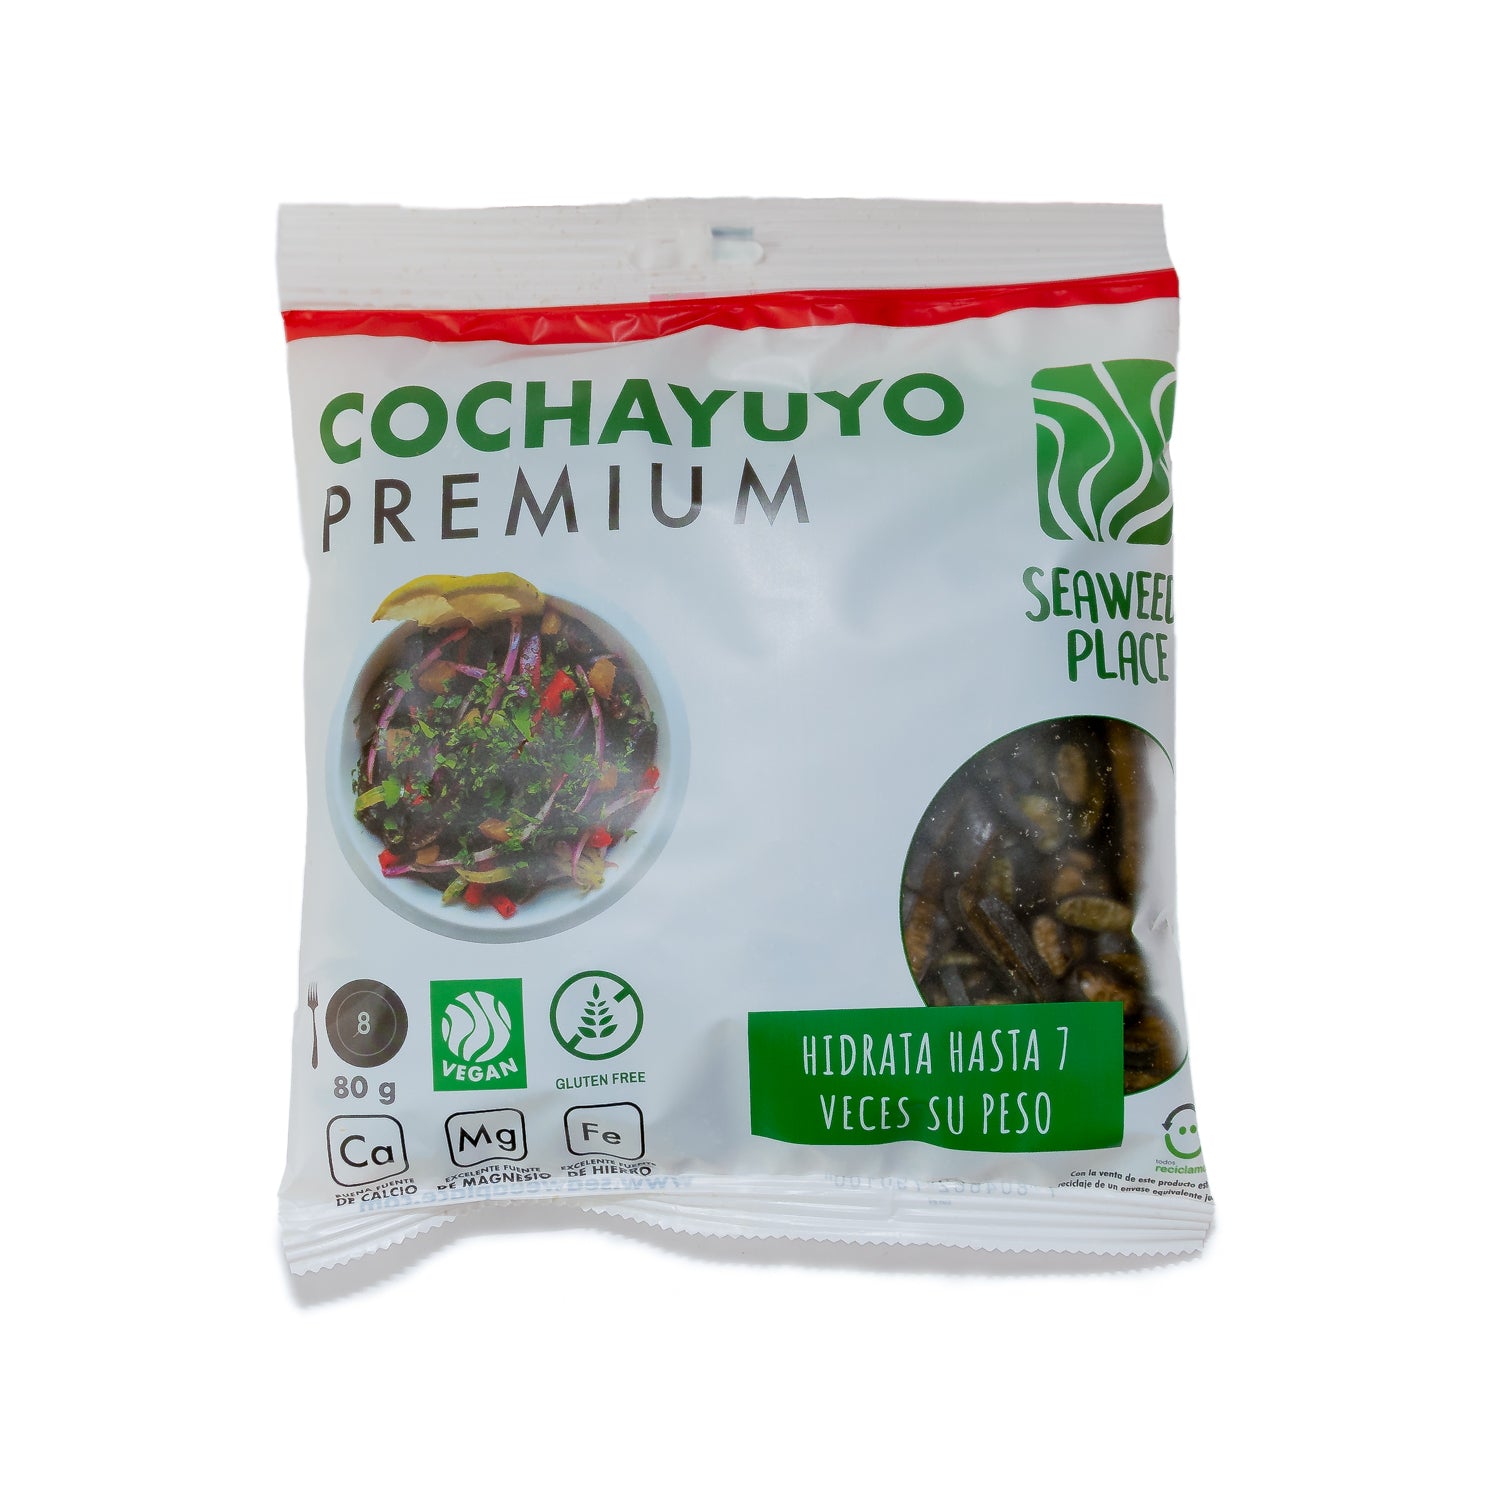 Cochayuyo Premium